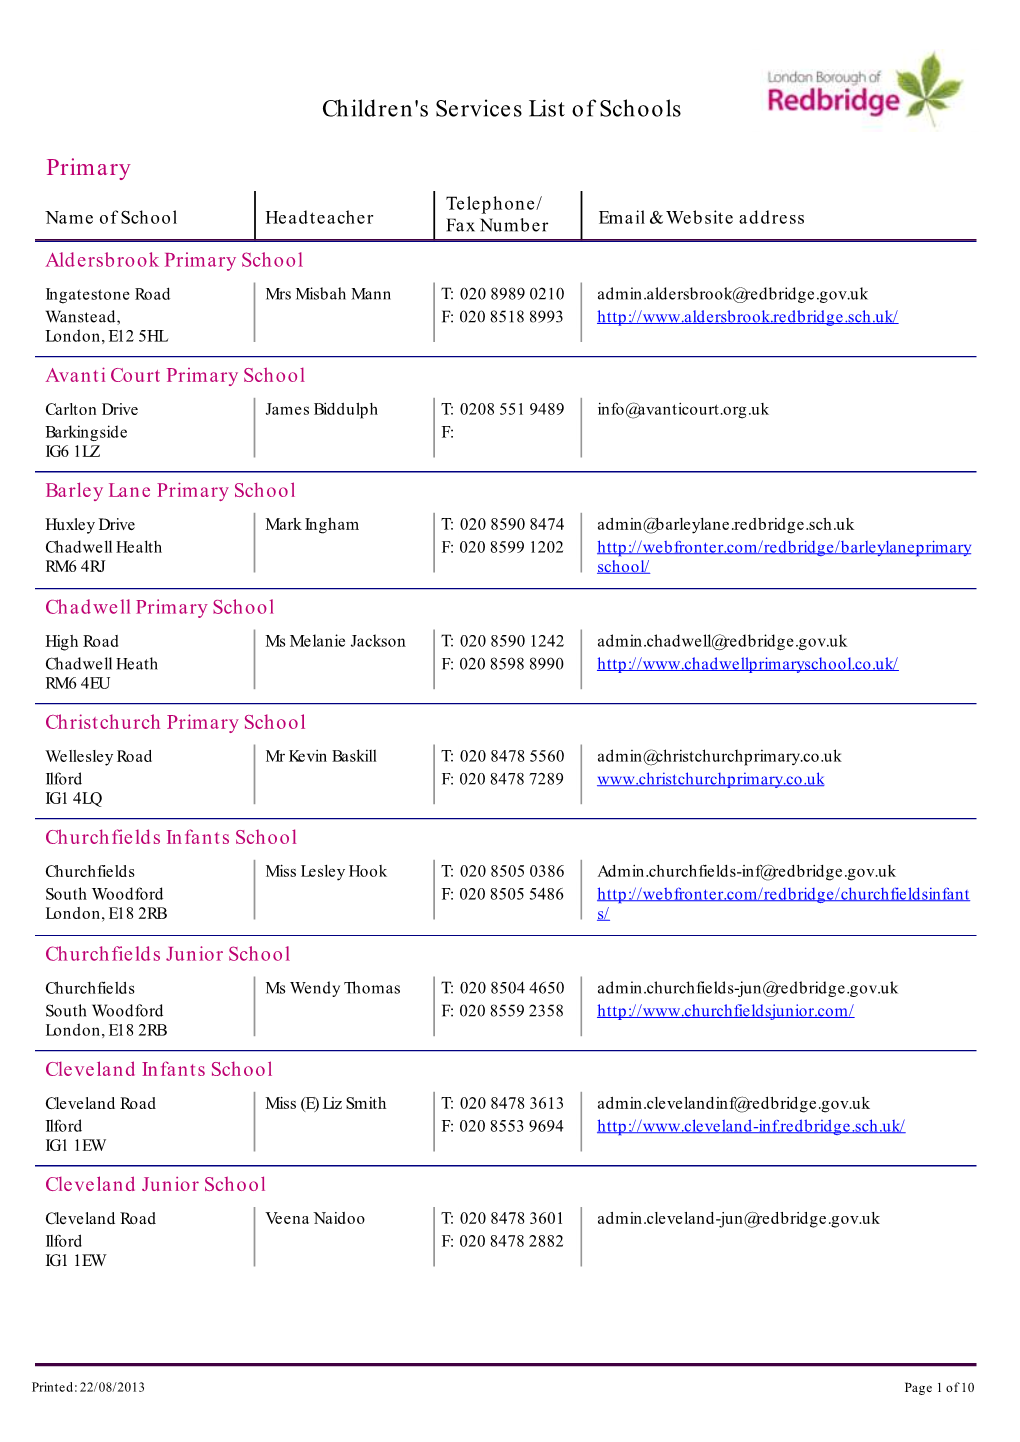 Children's Services List of Schools Primary